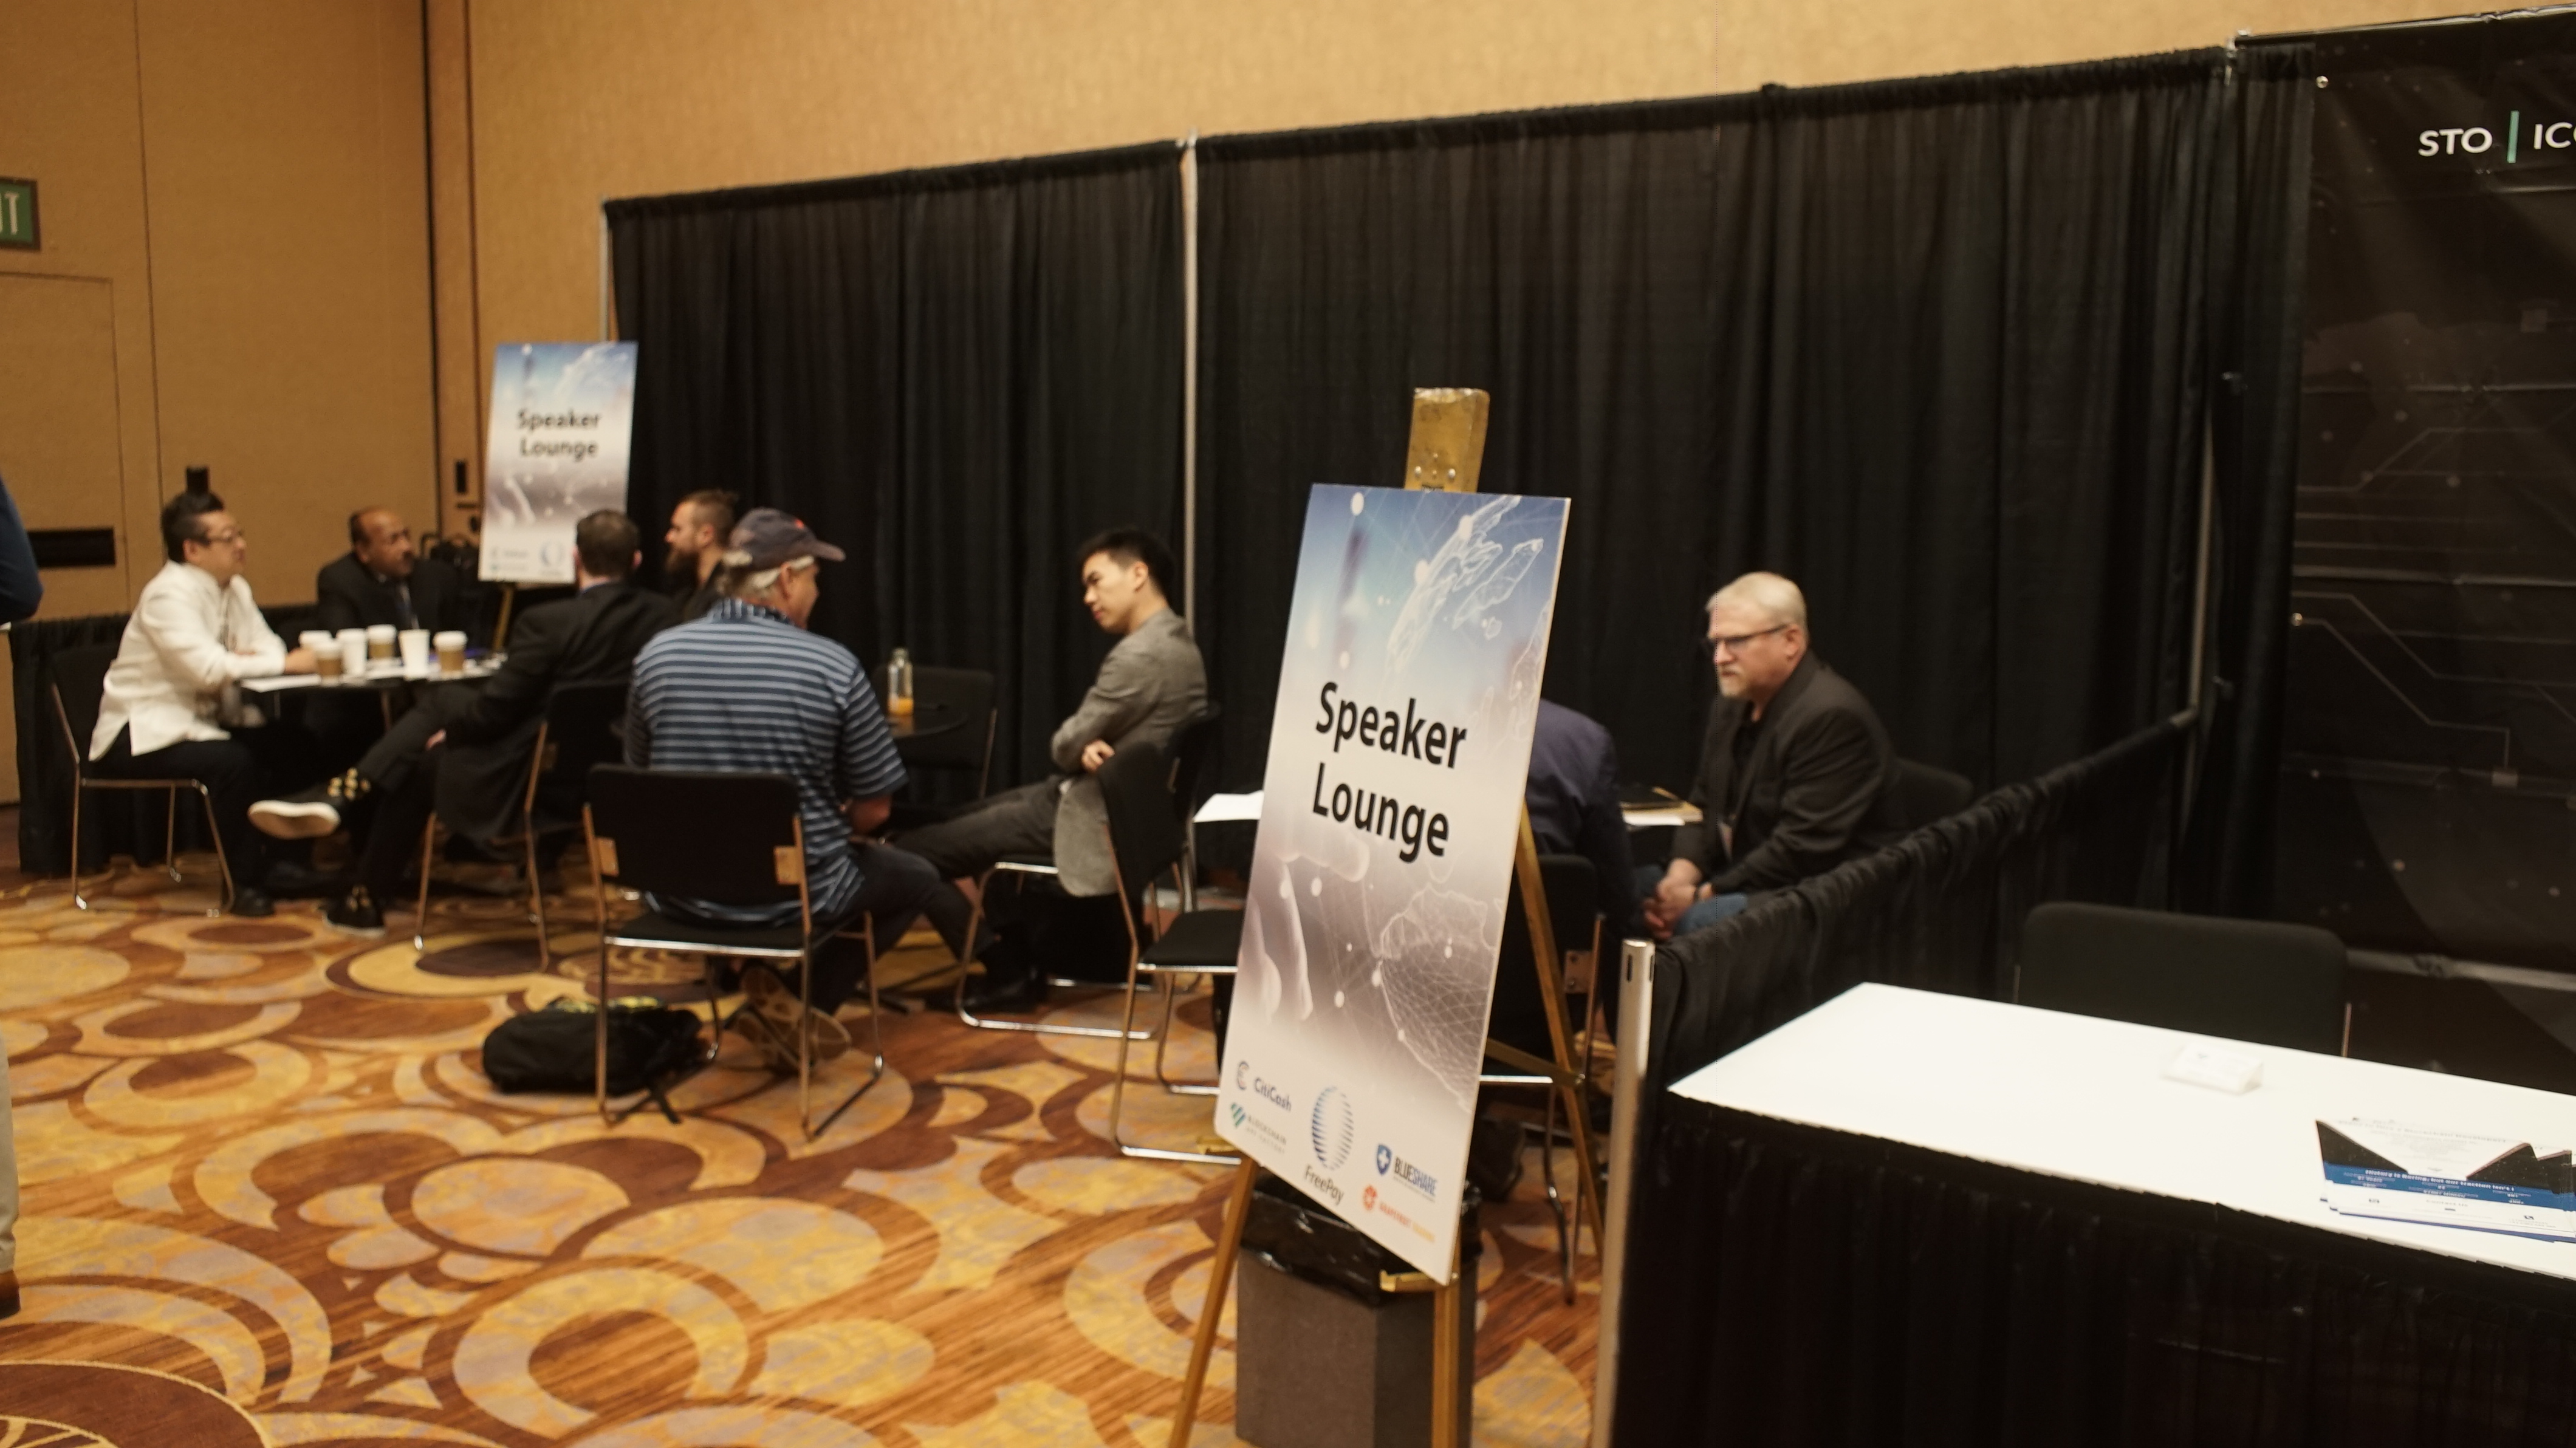 Speakers Lounge picture at CryptoBlockCon Las Vegas 2018